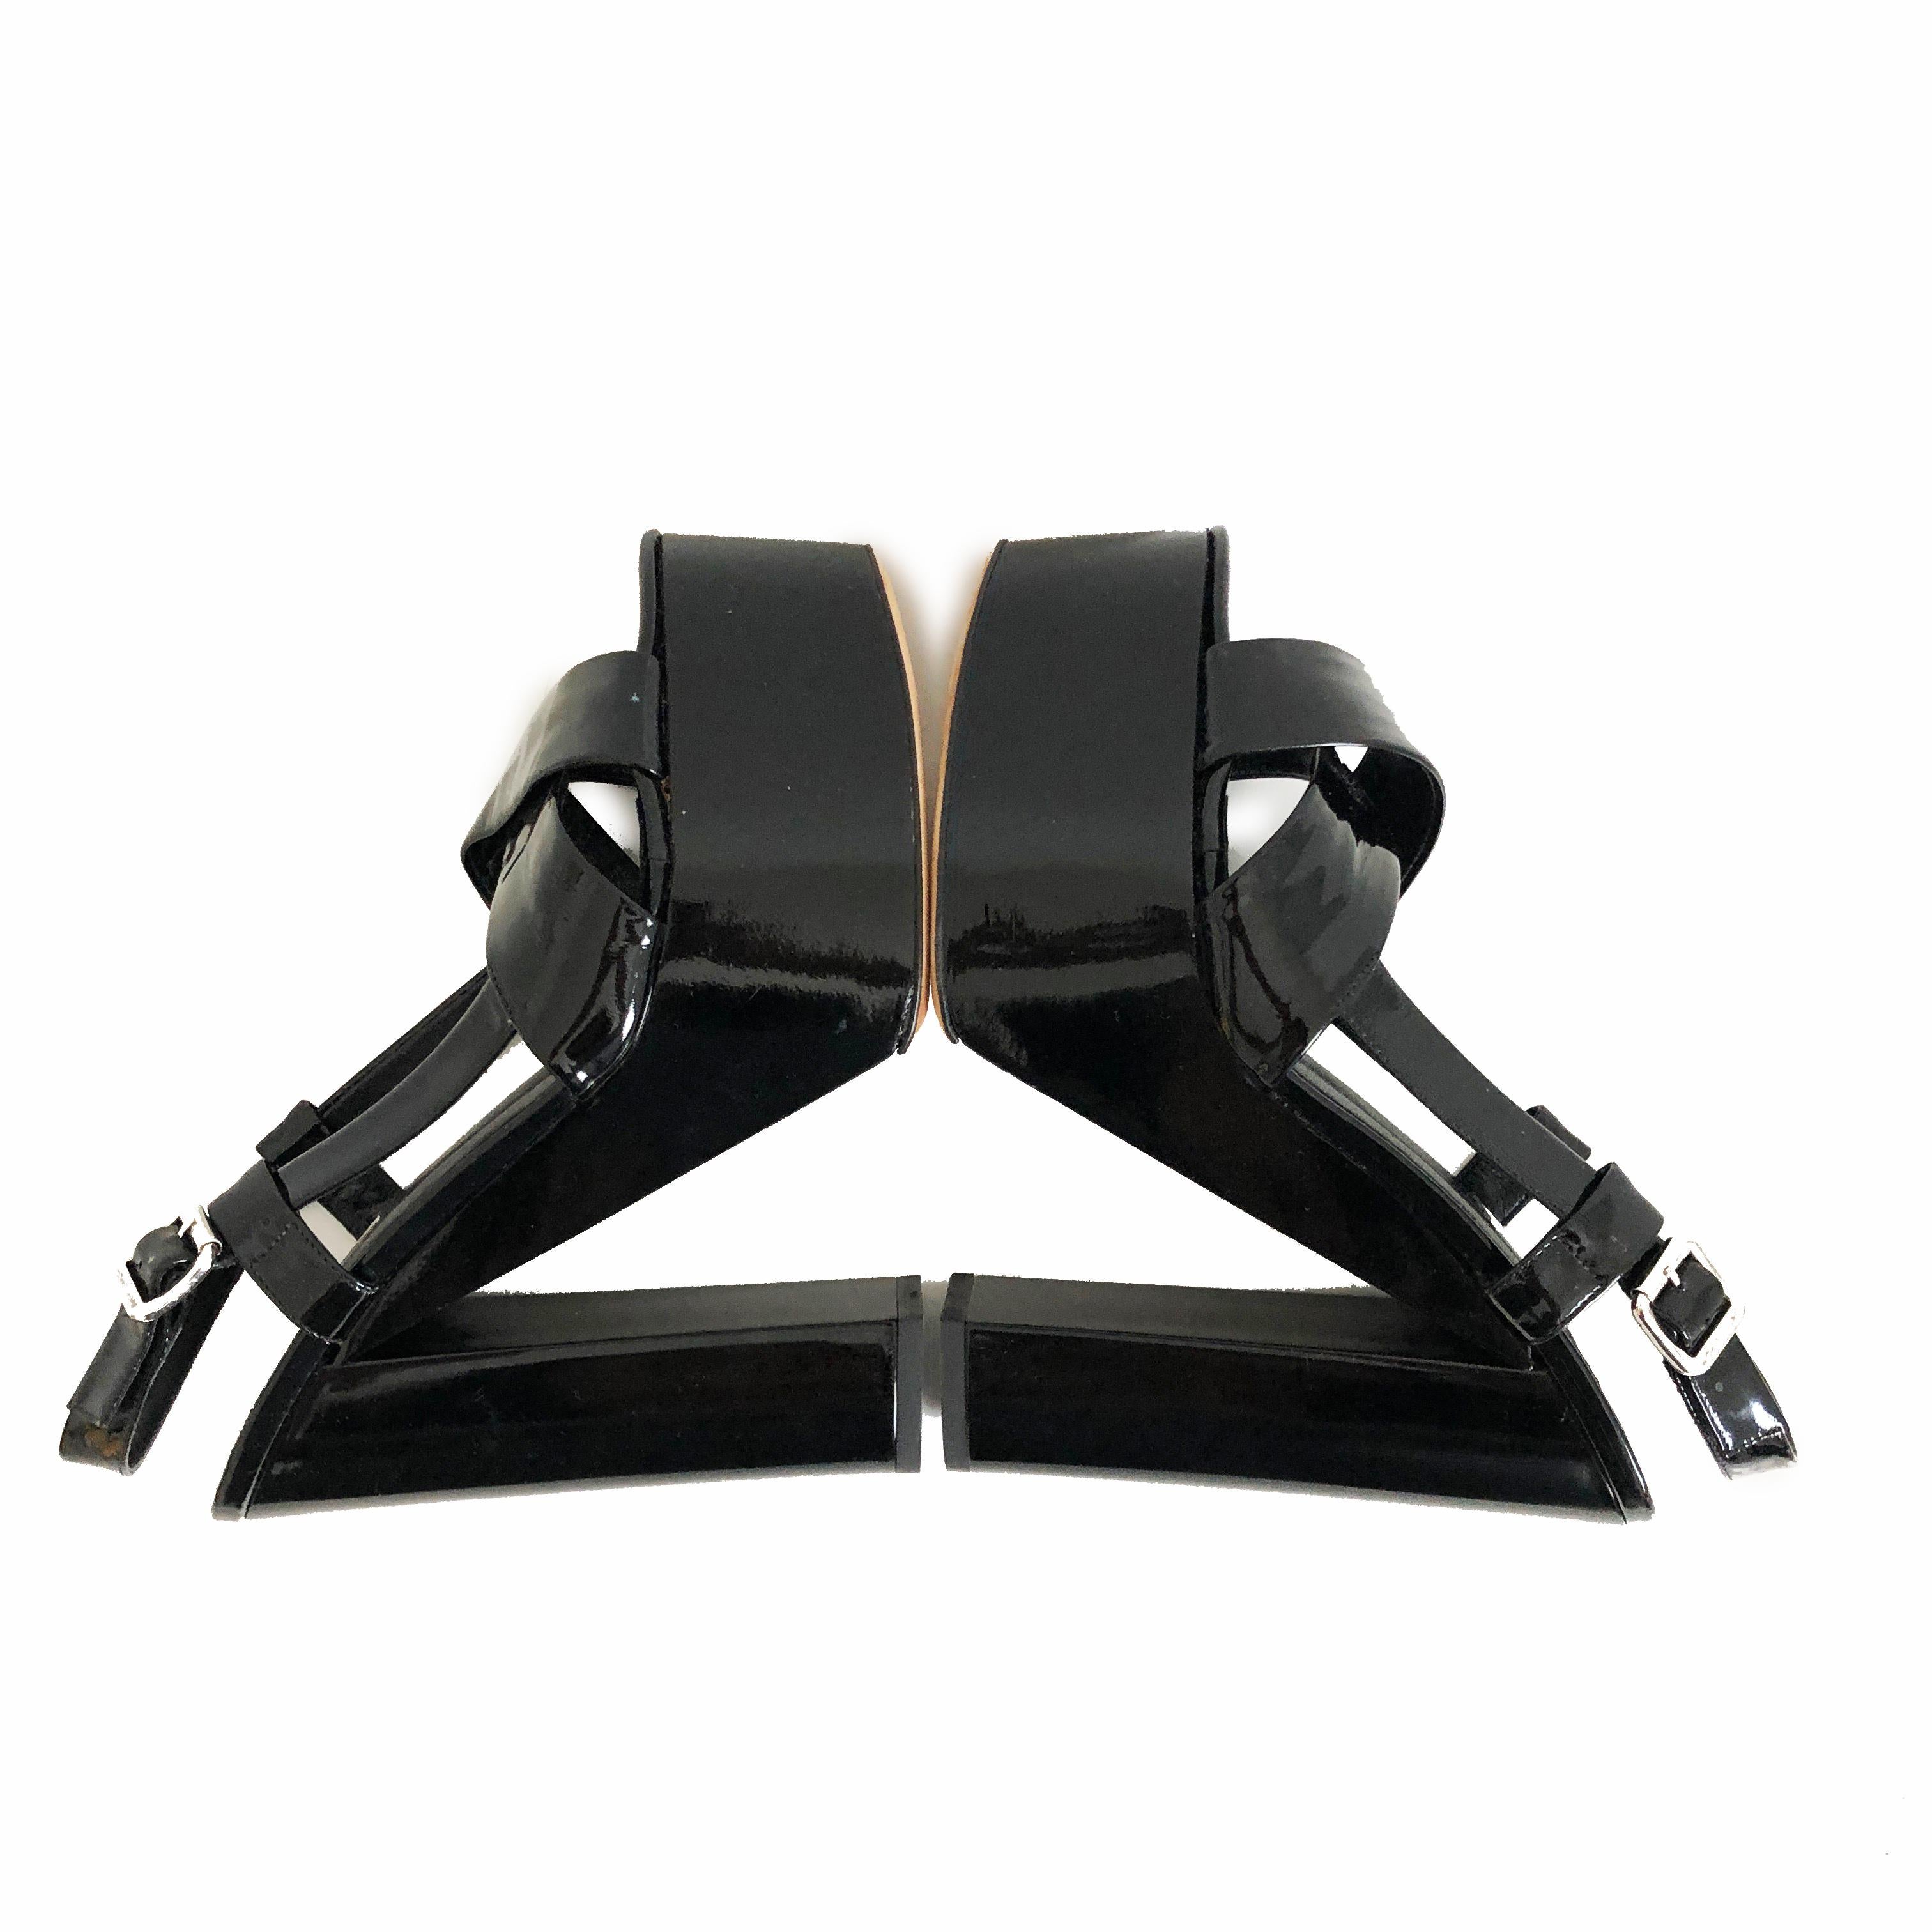 Michael Kors Black Patent Platforms Sandals Size 37.5 NOS NWOB For Sale 2